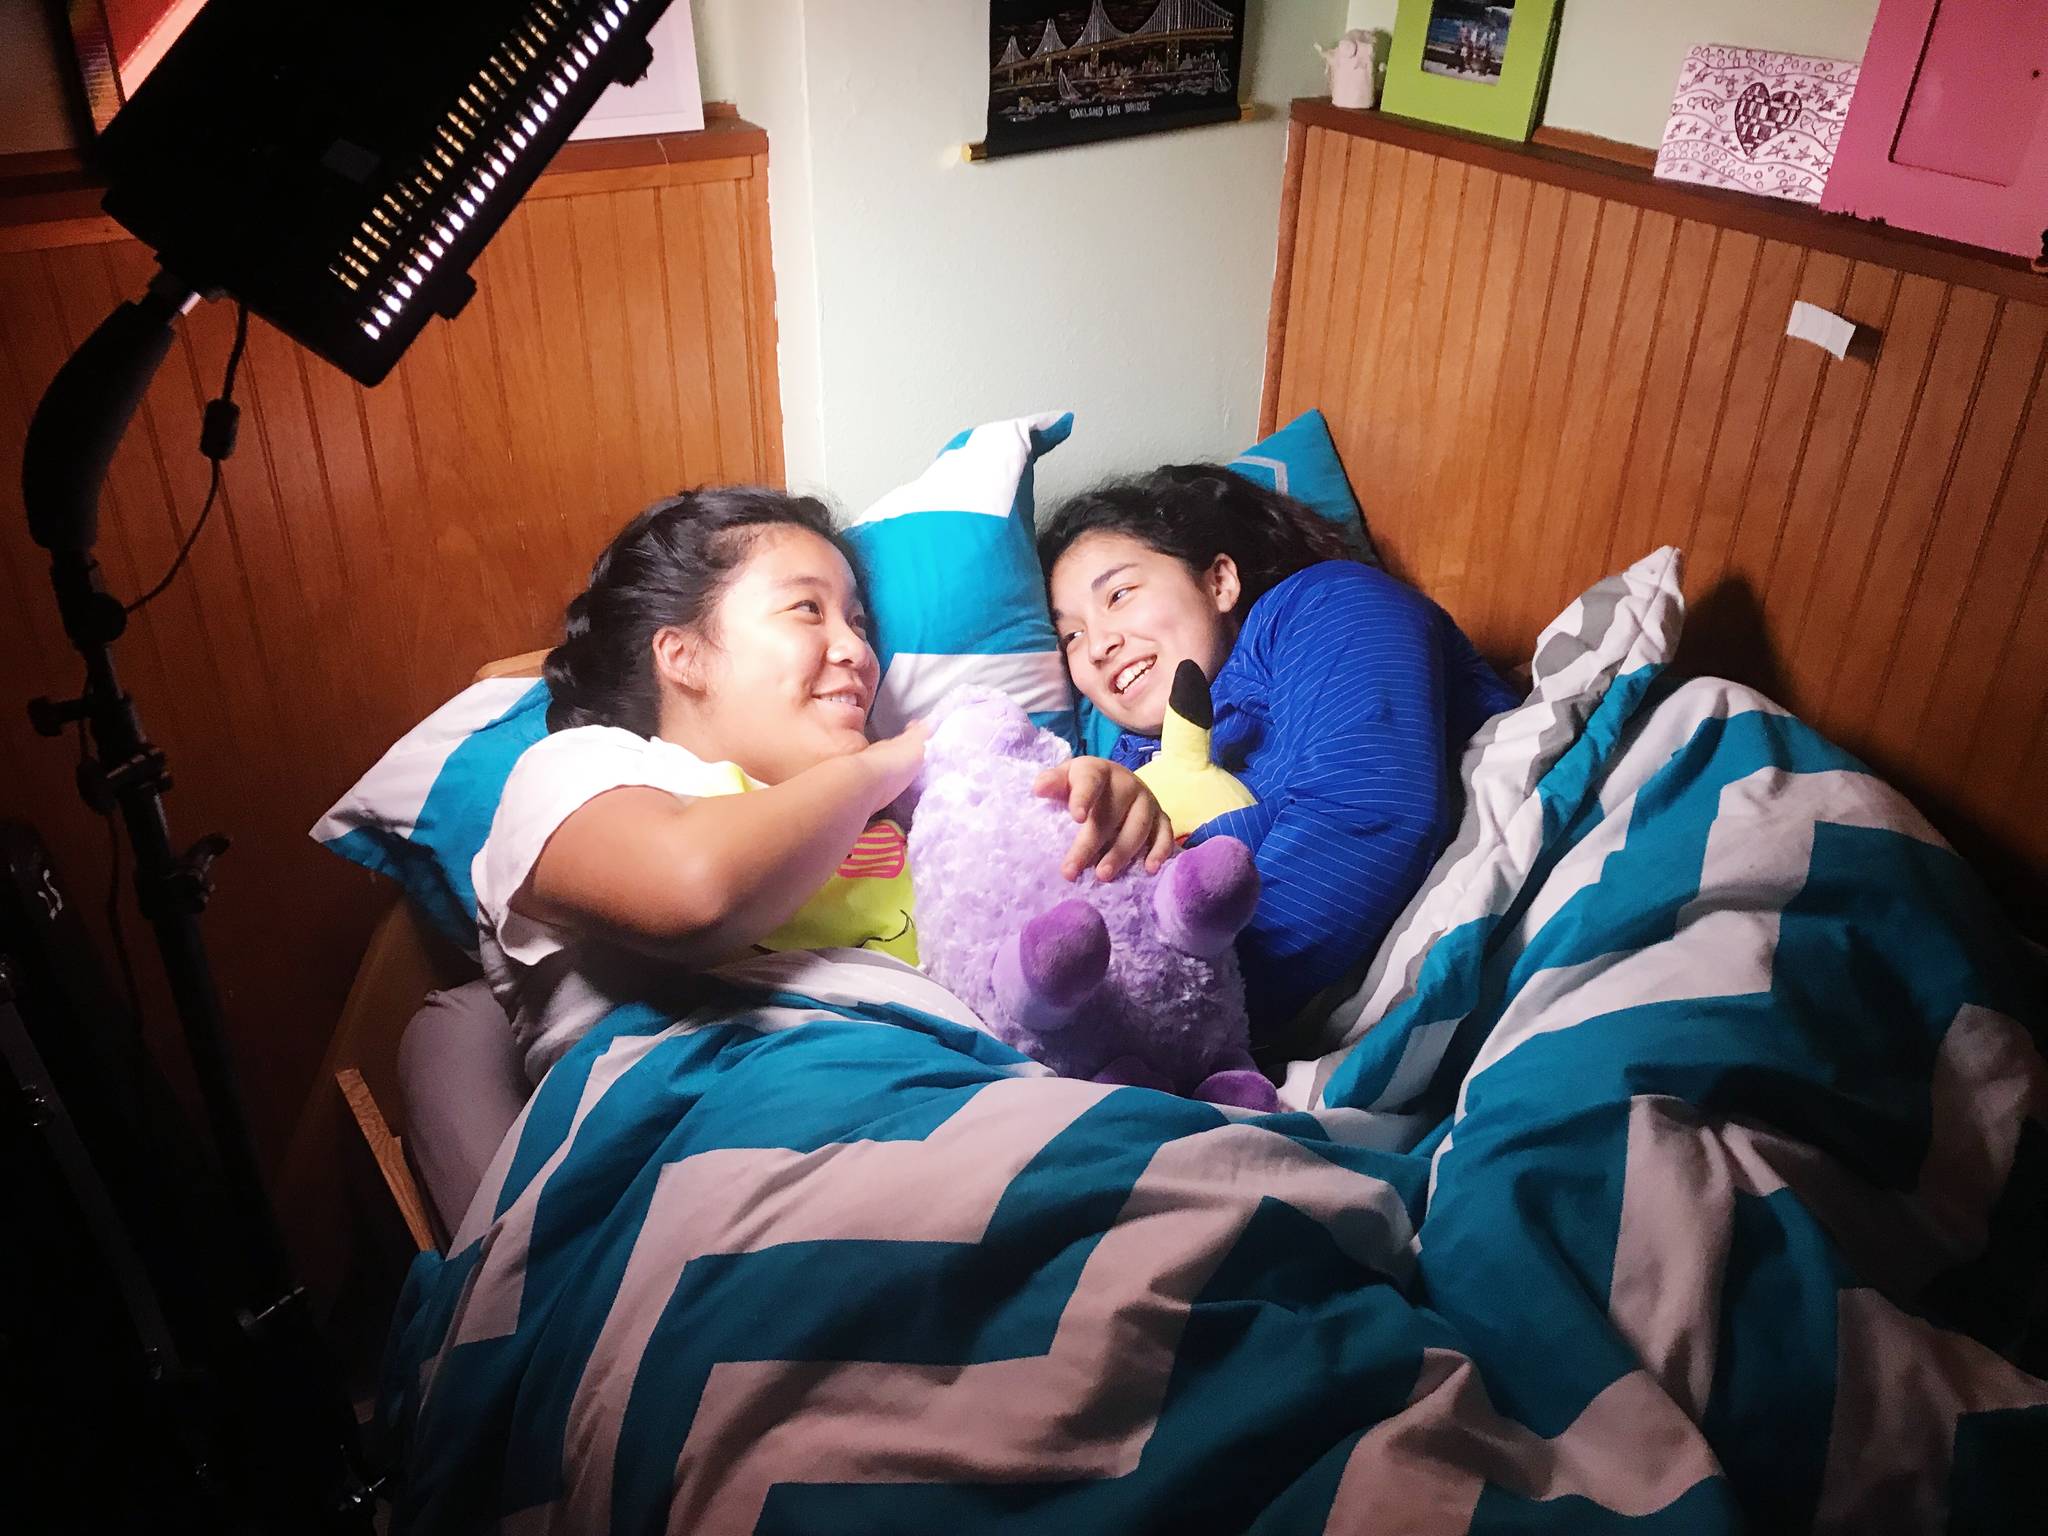 Mya Pecson and Jasmine Sears filming the sleepover scene in “How to Say Goodbye.” Image courtesy of Eriksen.